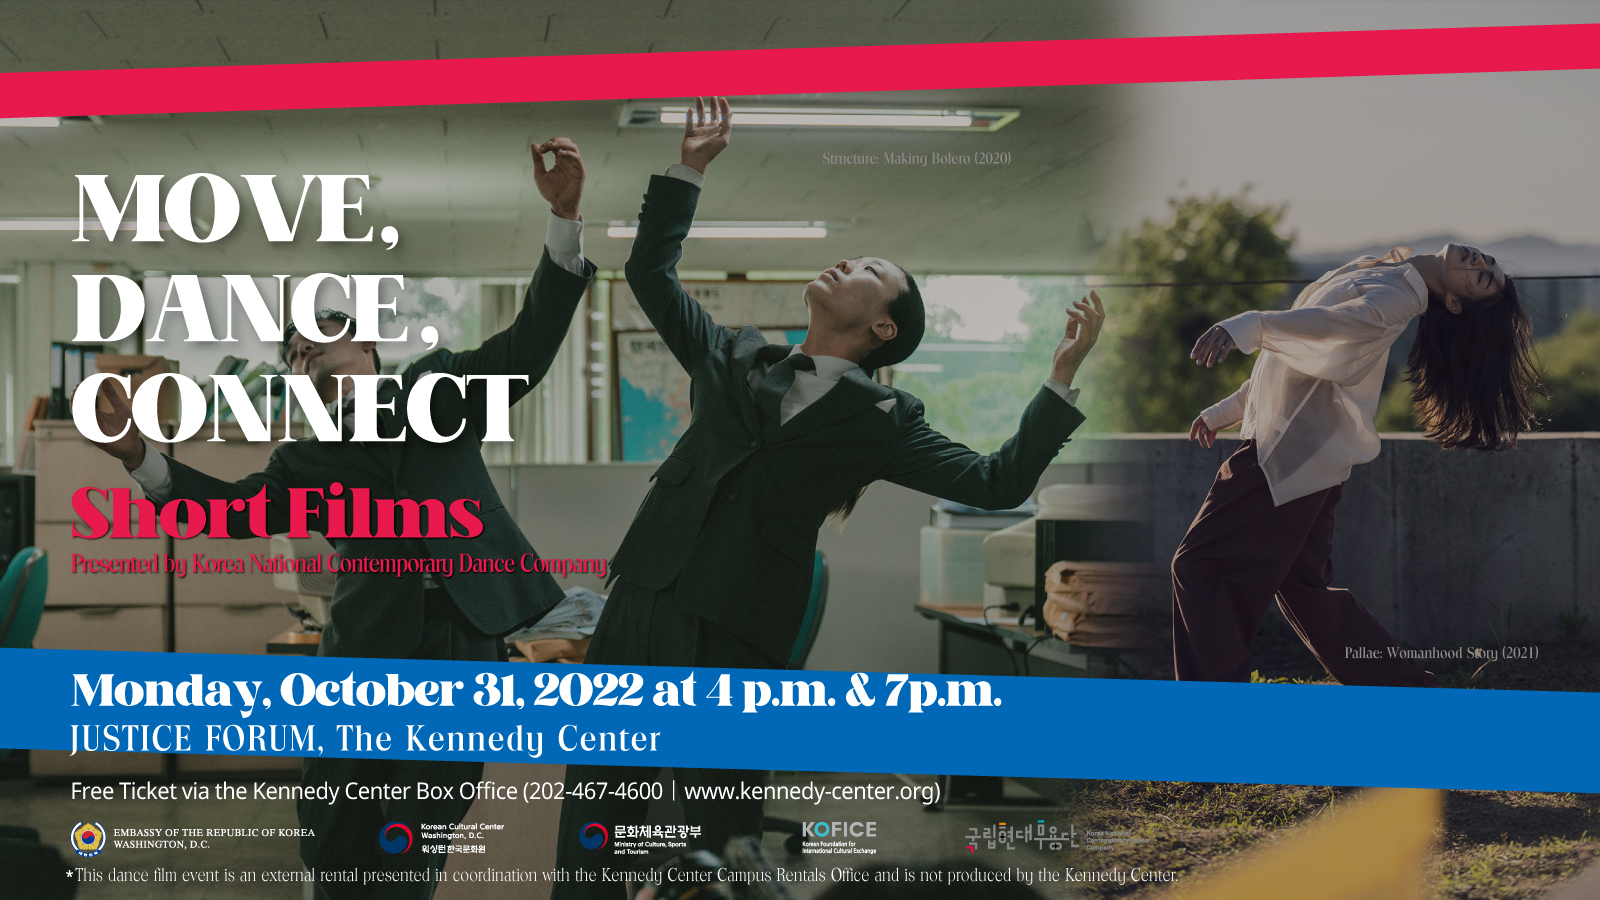 Move, Dance, Connect: Short Films presented by Korea National Contemporary Dance Company, Washington,Washington, D.C,United States